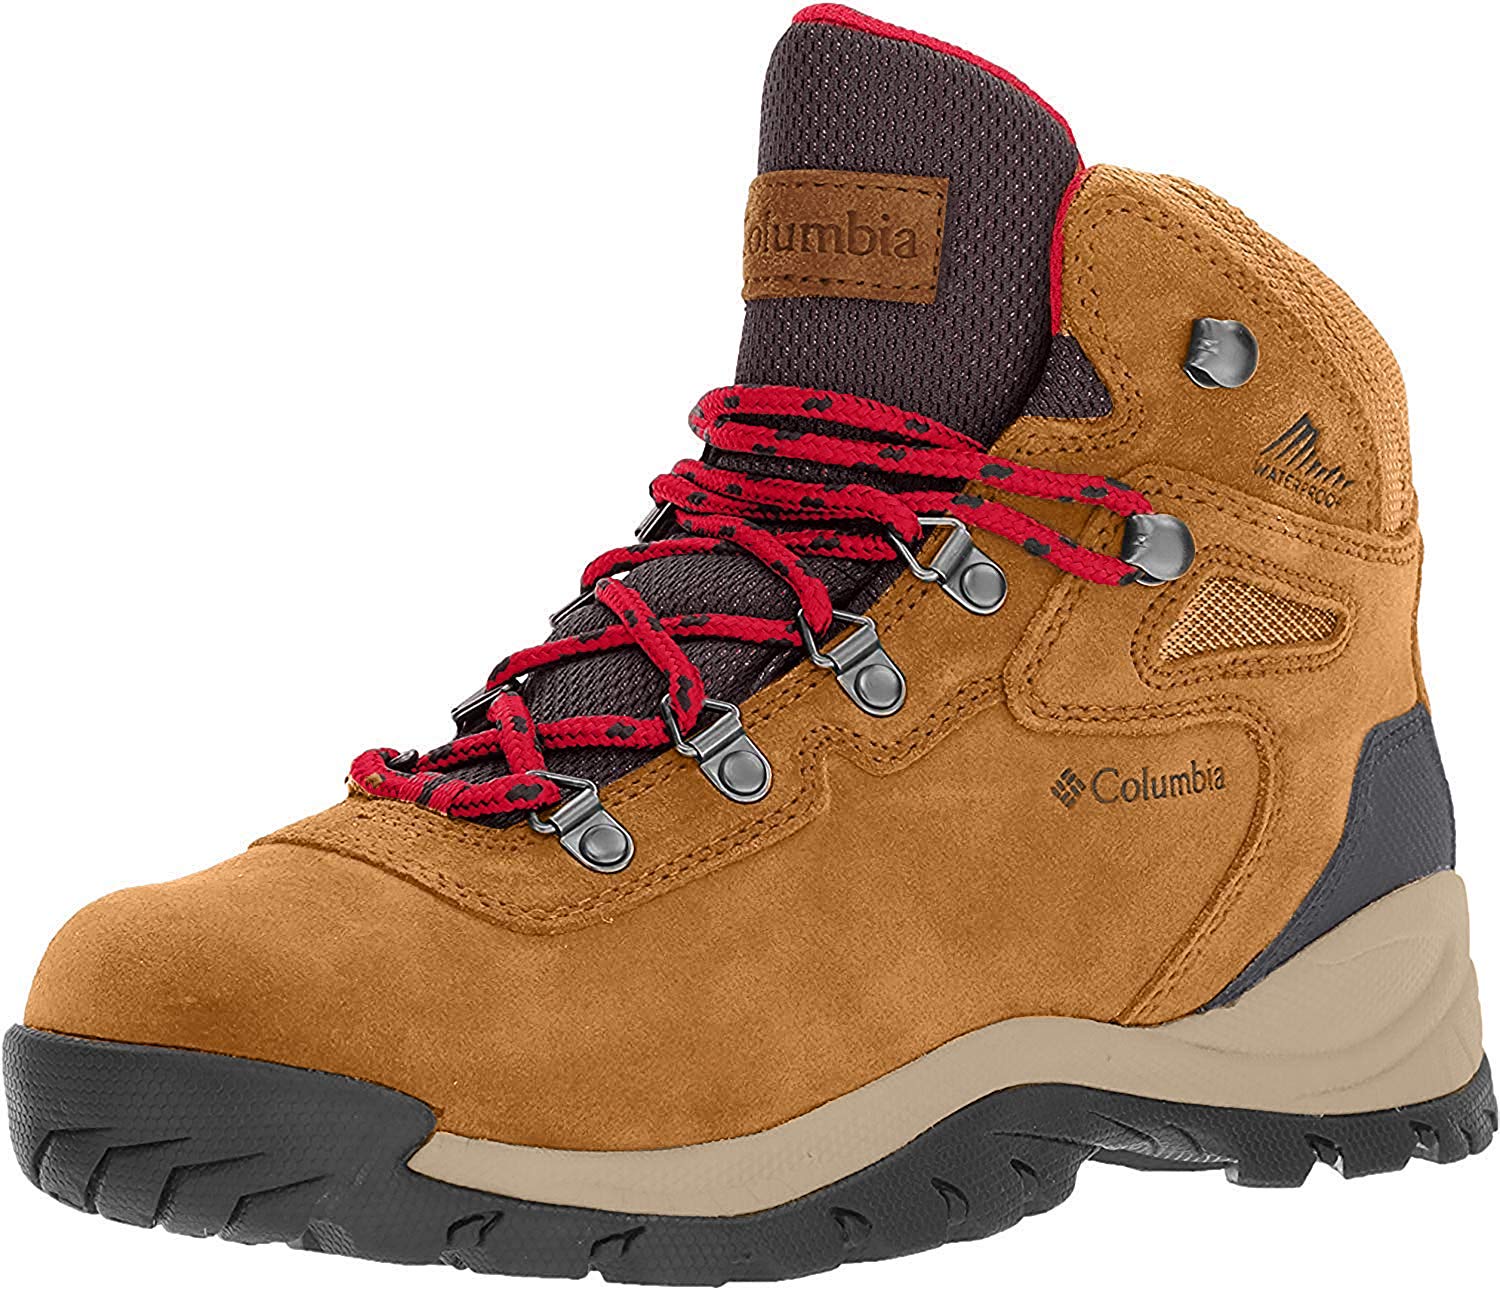 fashionable hiking boots